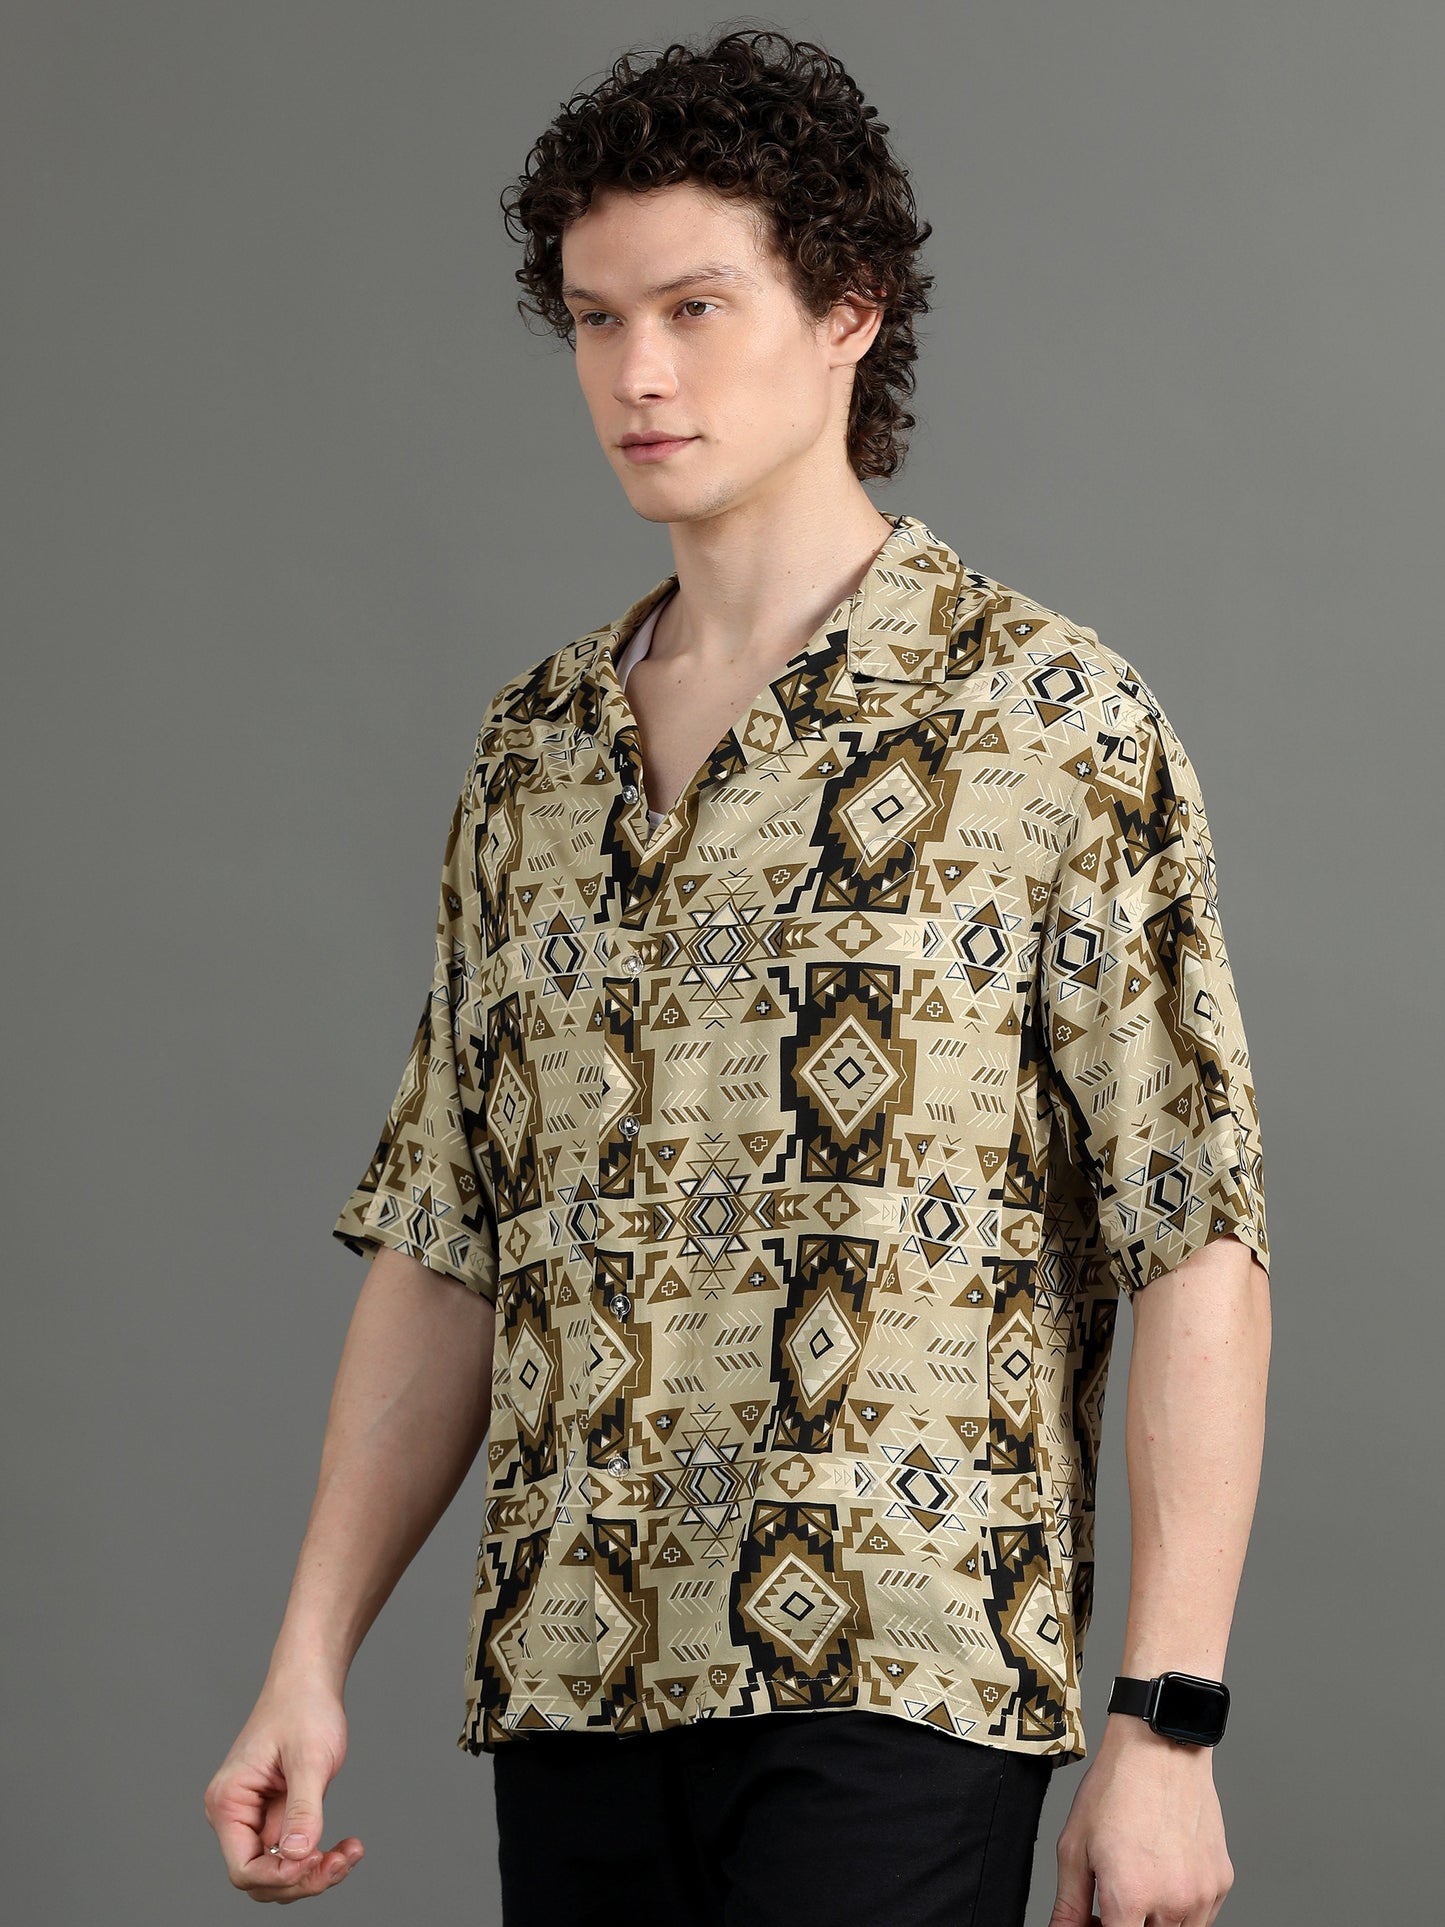 Premium Men Summer Shirt, Oversized Fit, Viscose Rayon, Half Sleeve, Printed